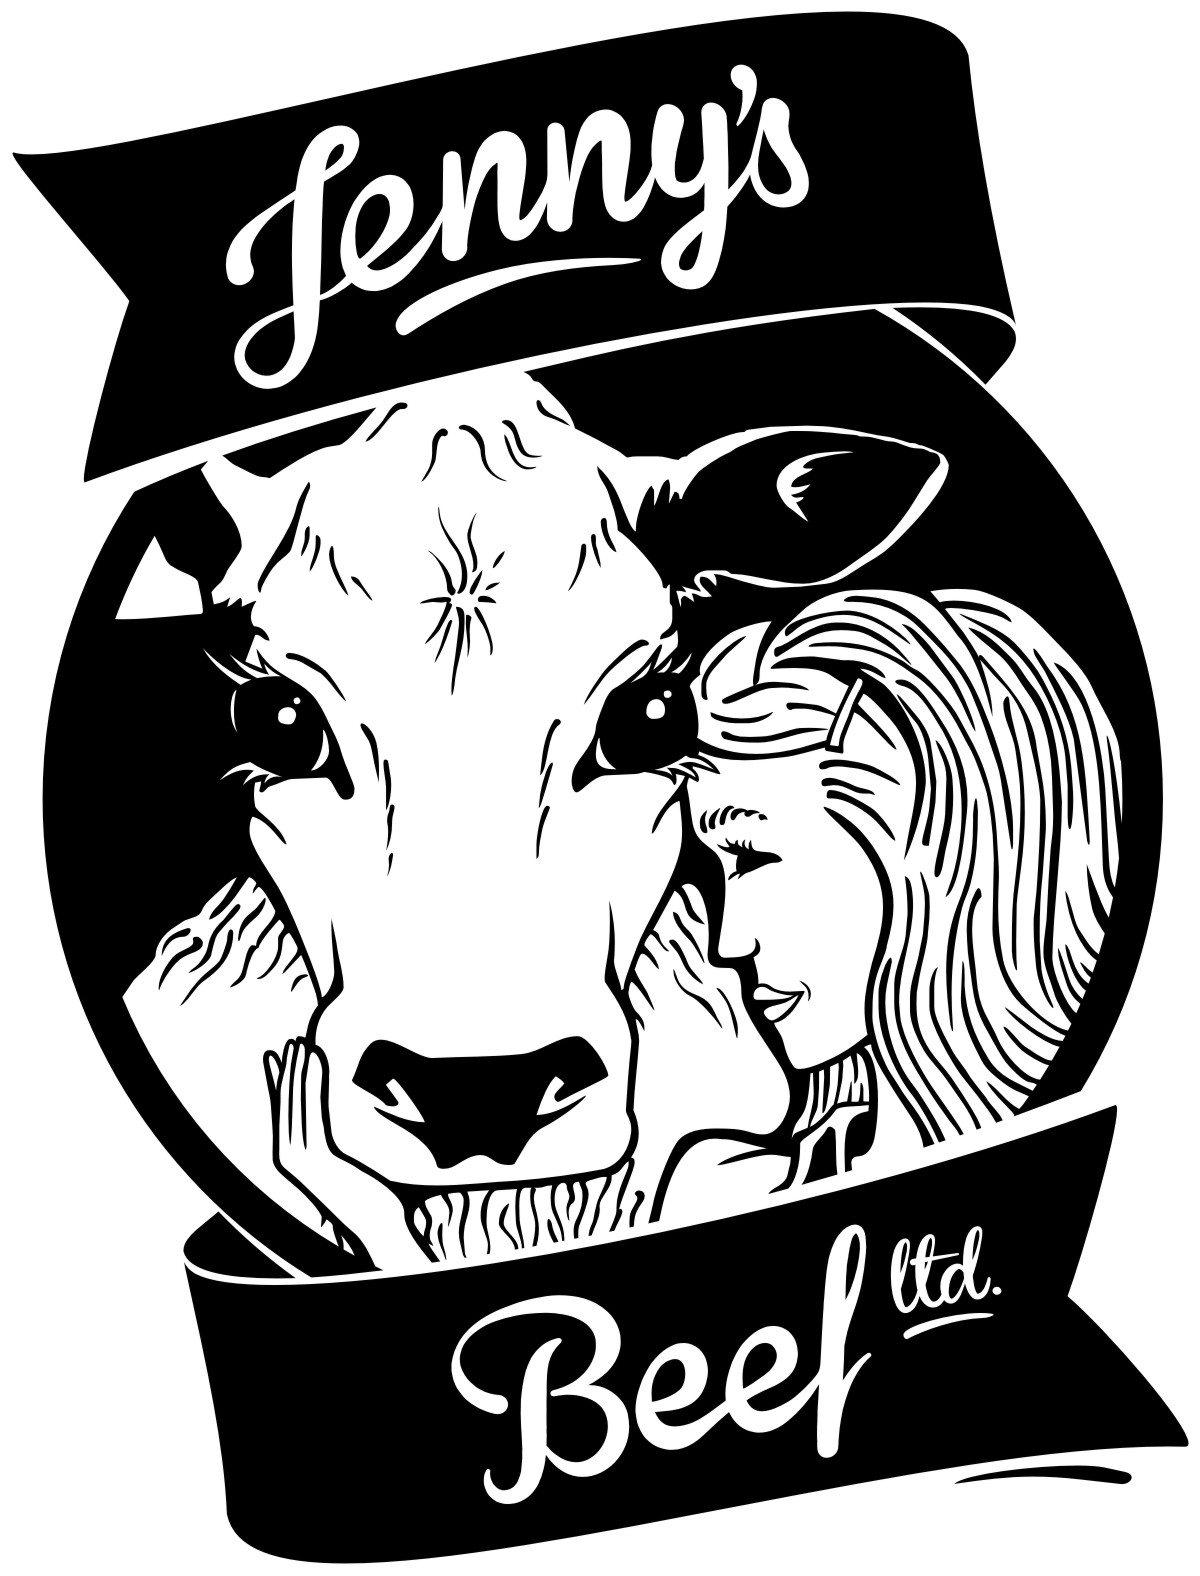 Jenny's Beef Ltd